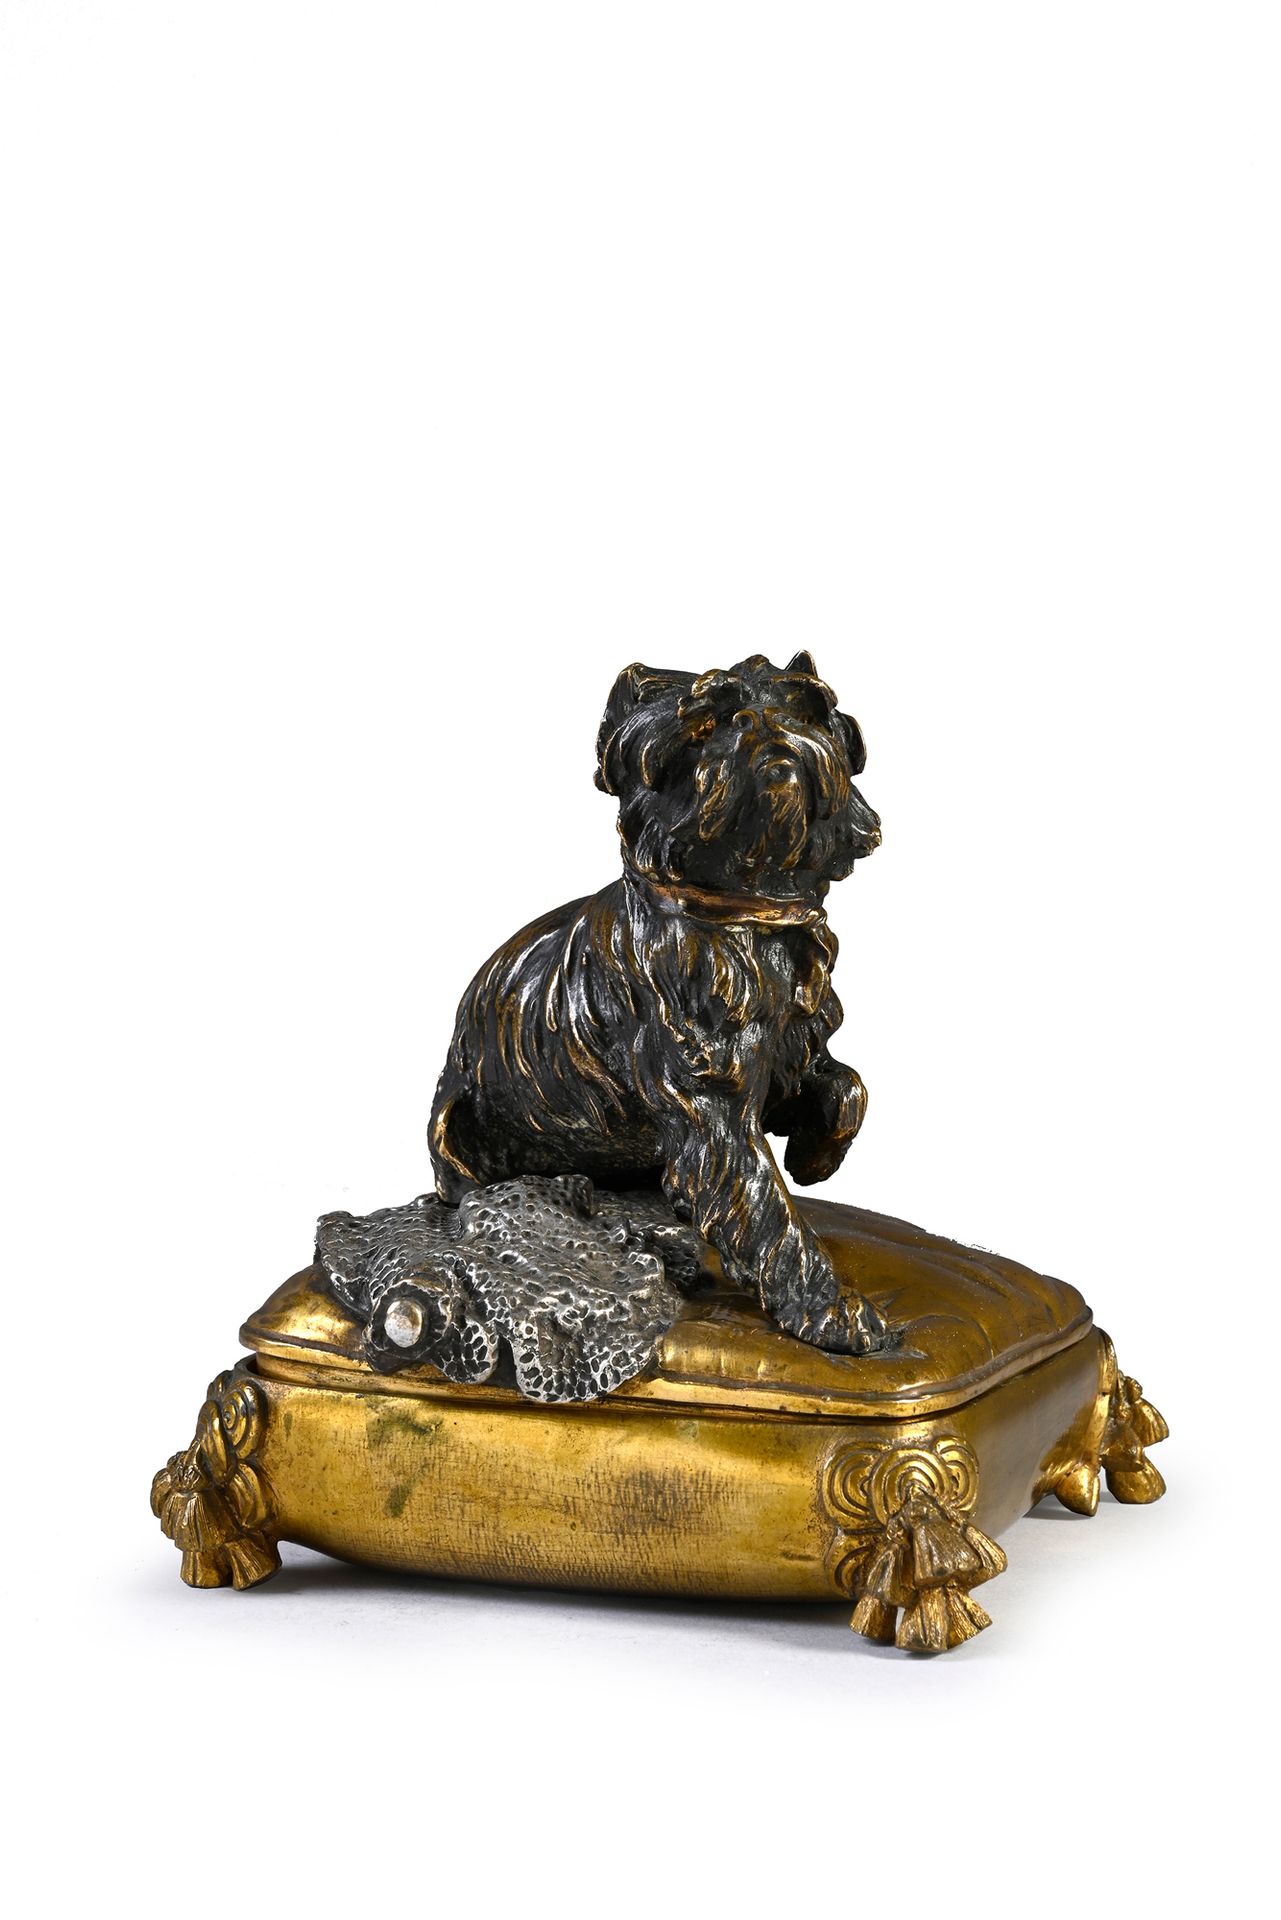 Prosper LECOUTURIER (1855-1924) 饰有一只狗的棕色青铜首饰盒，盒上有一个饰有边饰的乌金垫子和一个银色青铜盖子。
20 世纪早期。
&hellip;